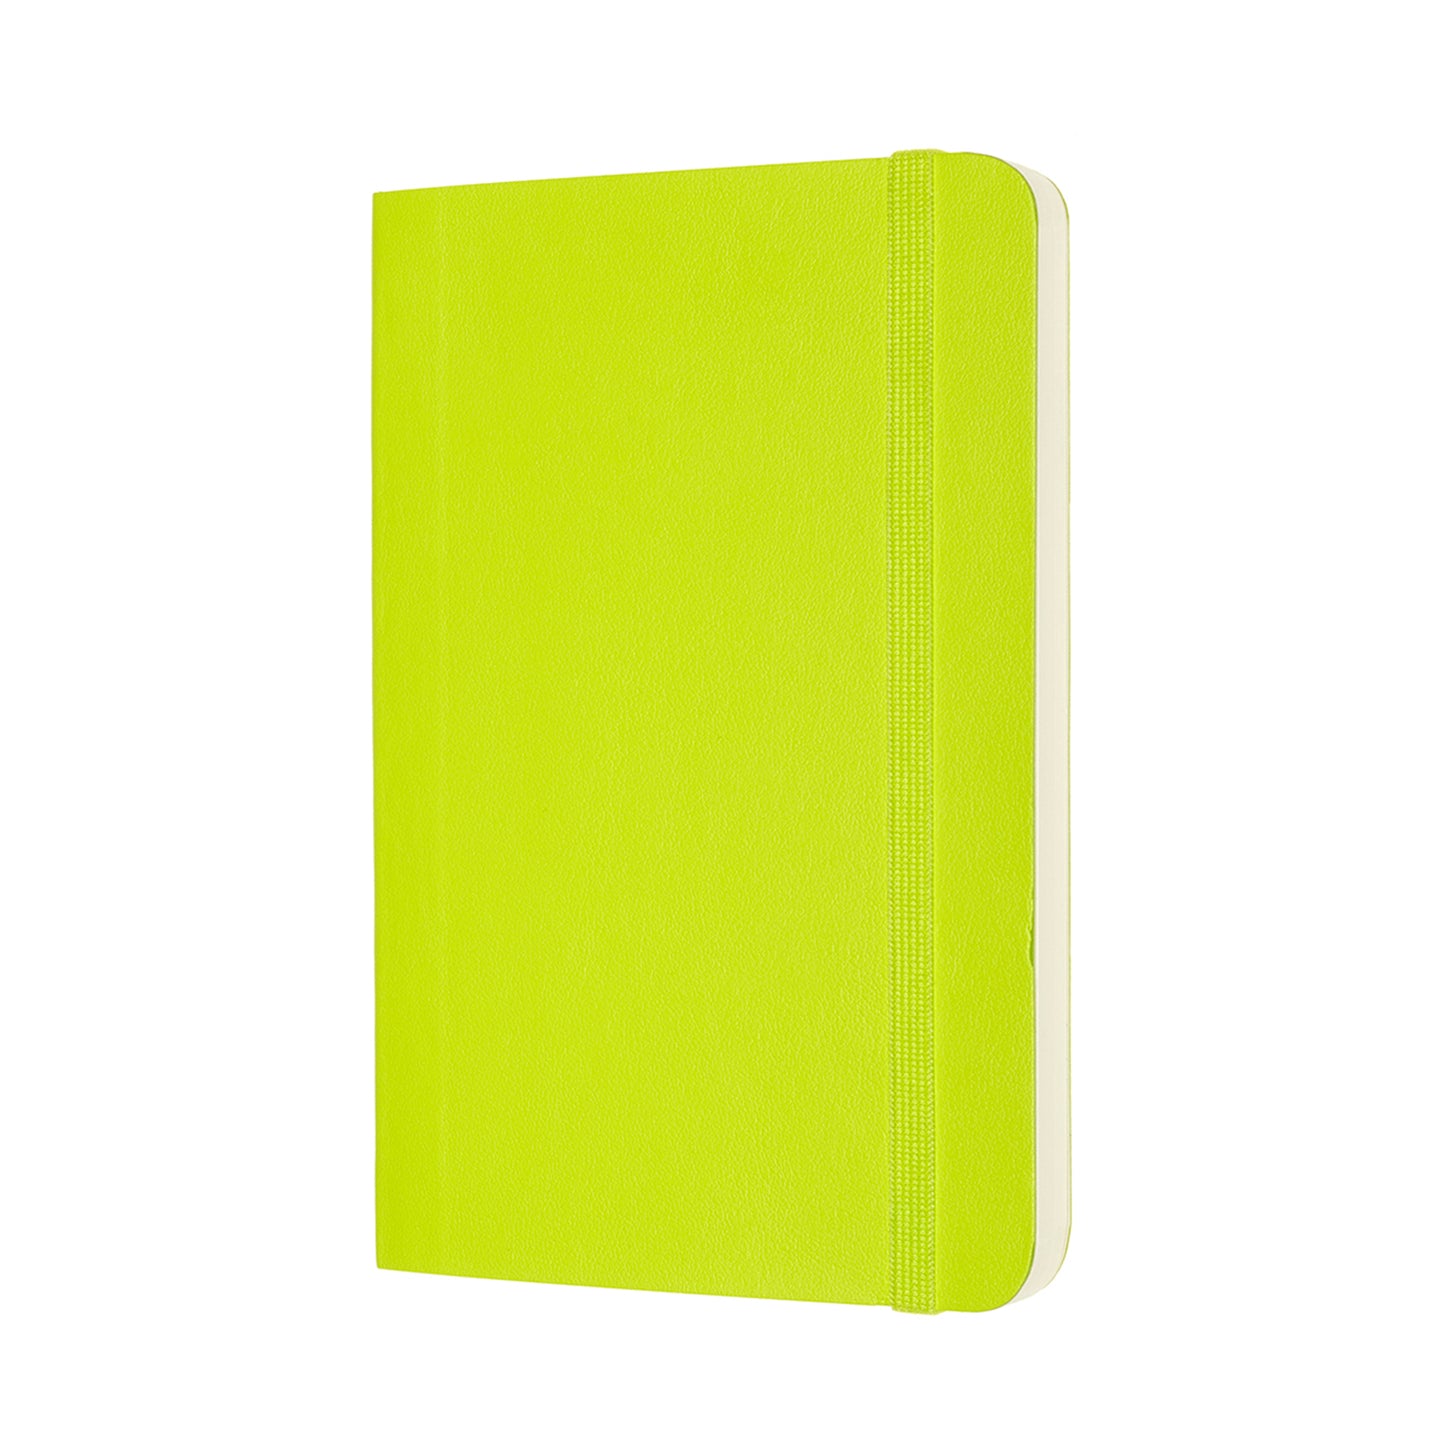 Pocket Soft Cover Notebook